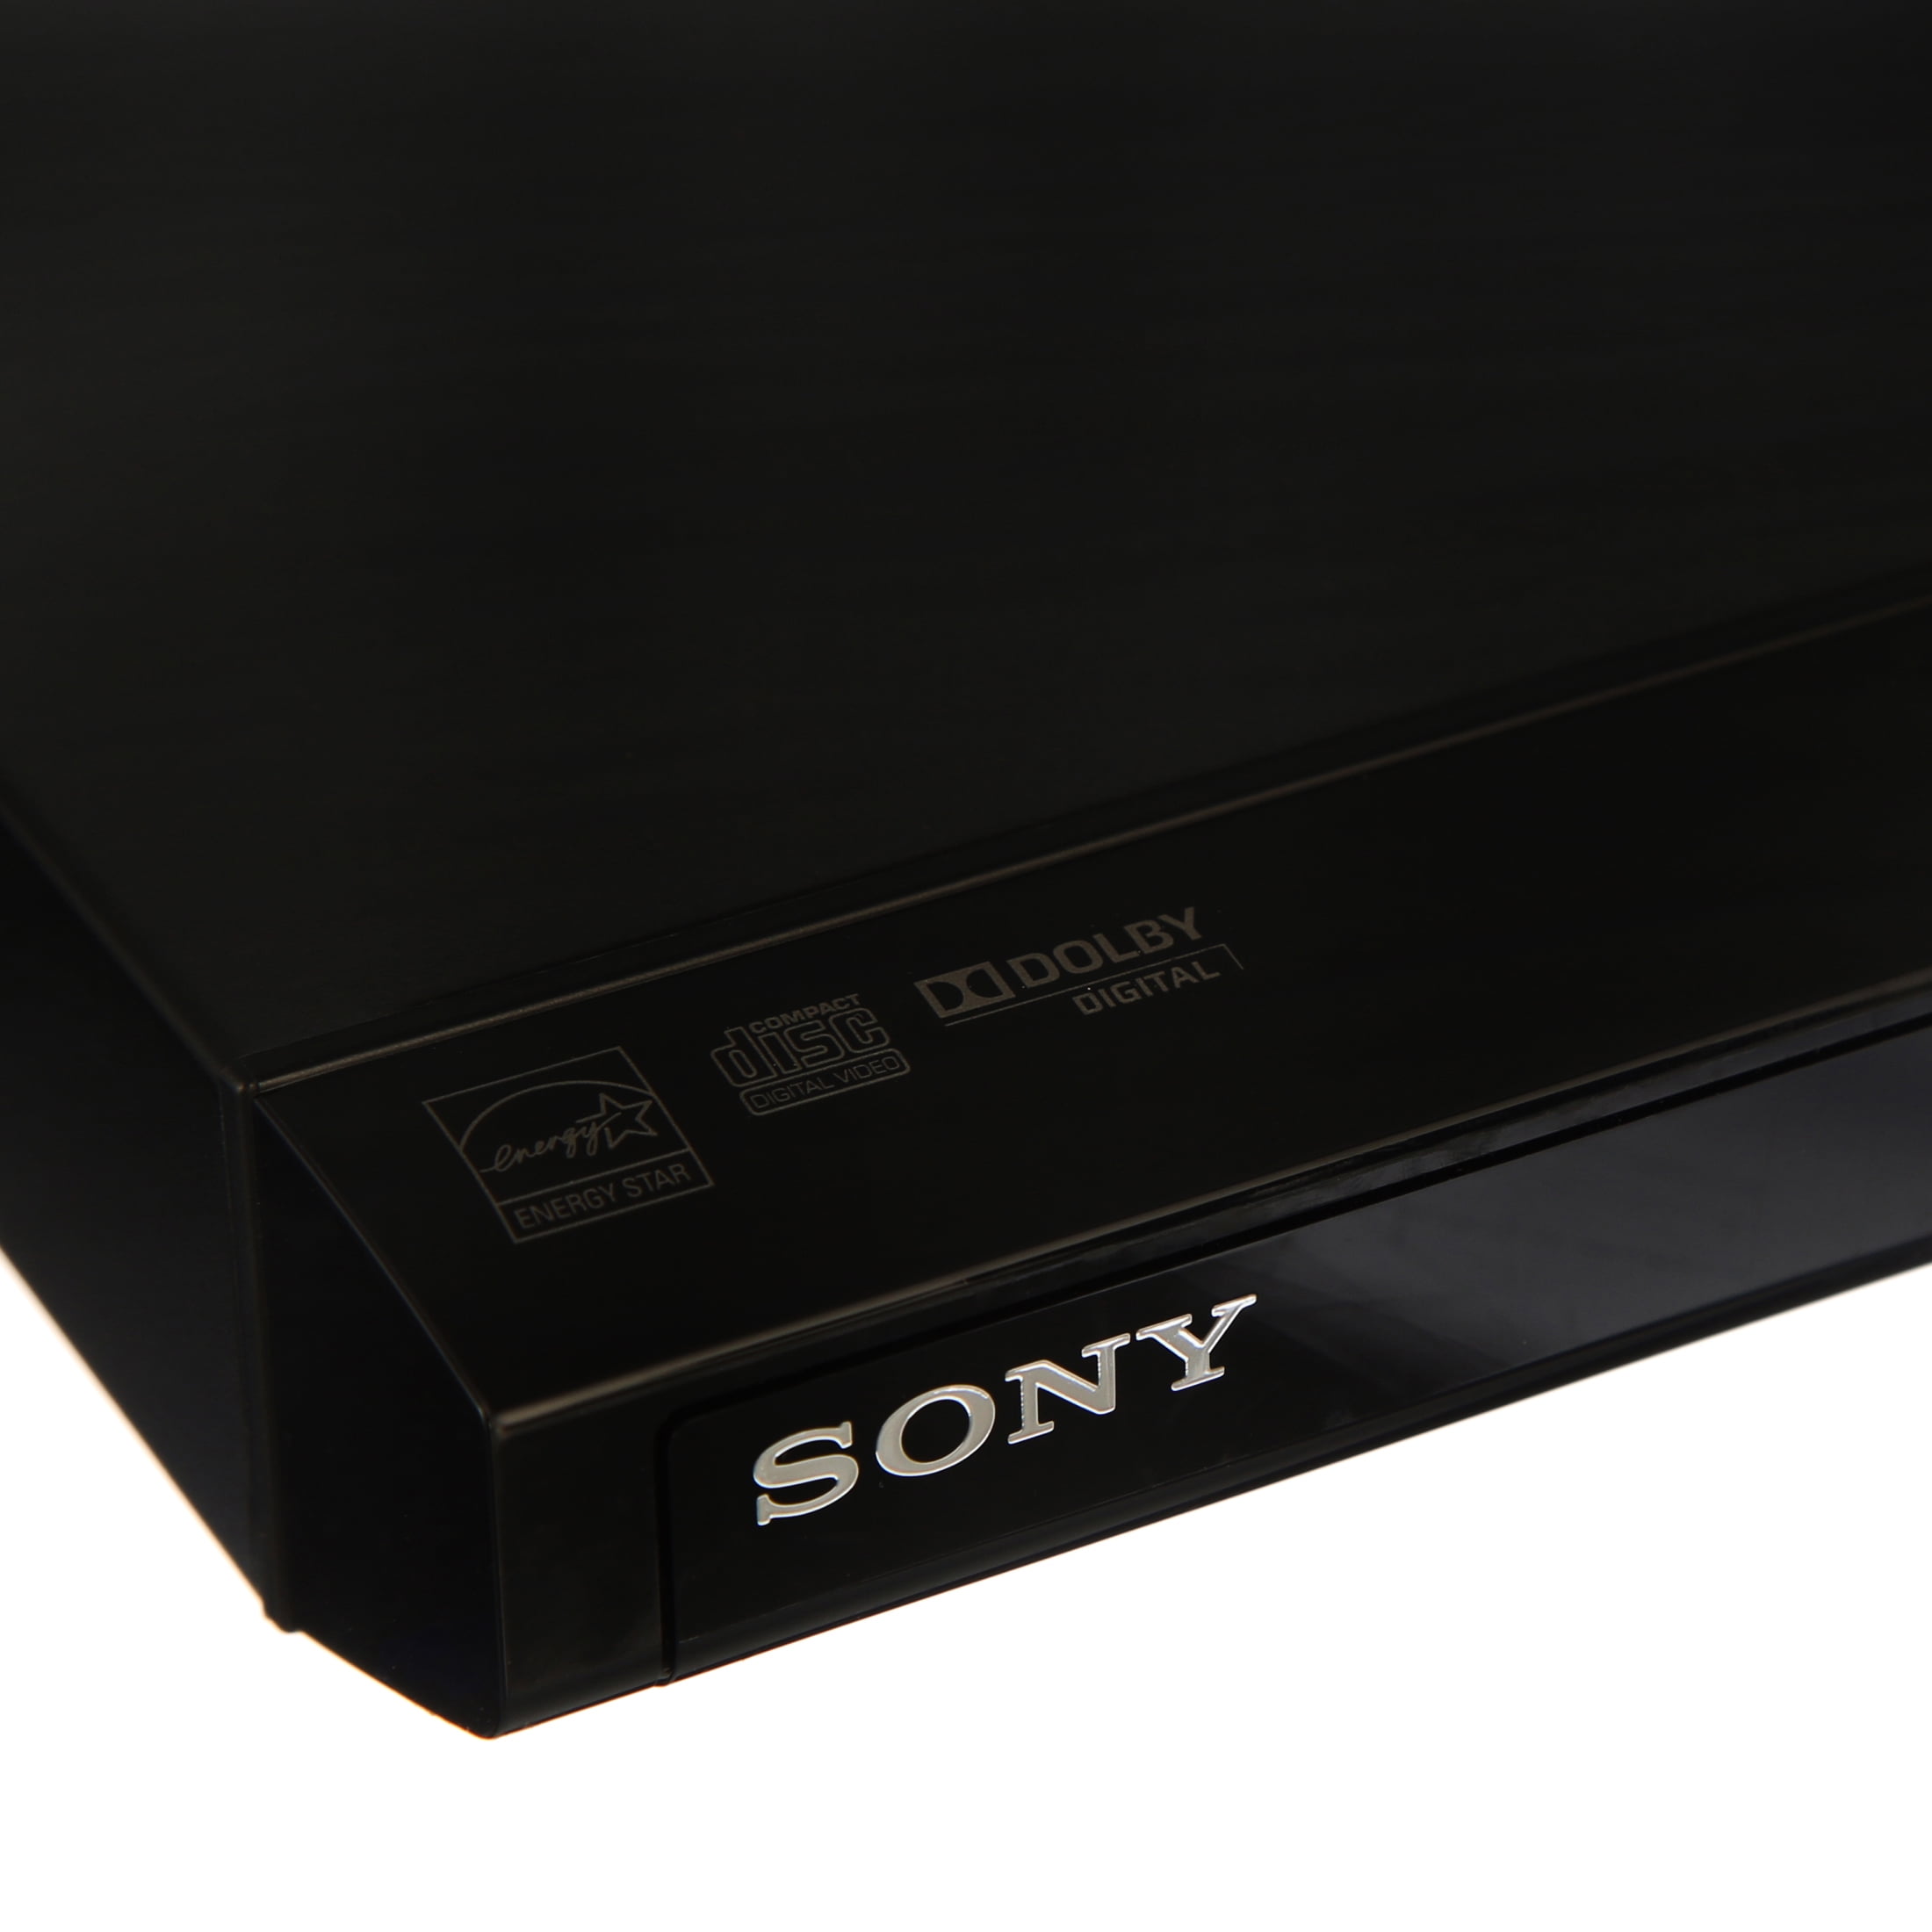 Sony - HDMI Player 1080p Upscaling DVP-SR510H DVD